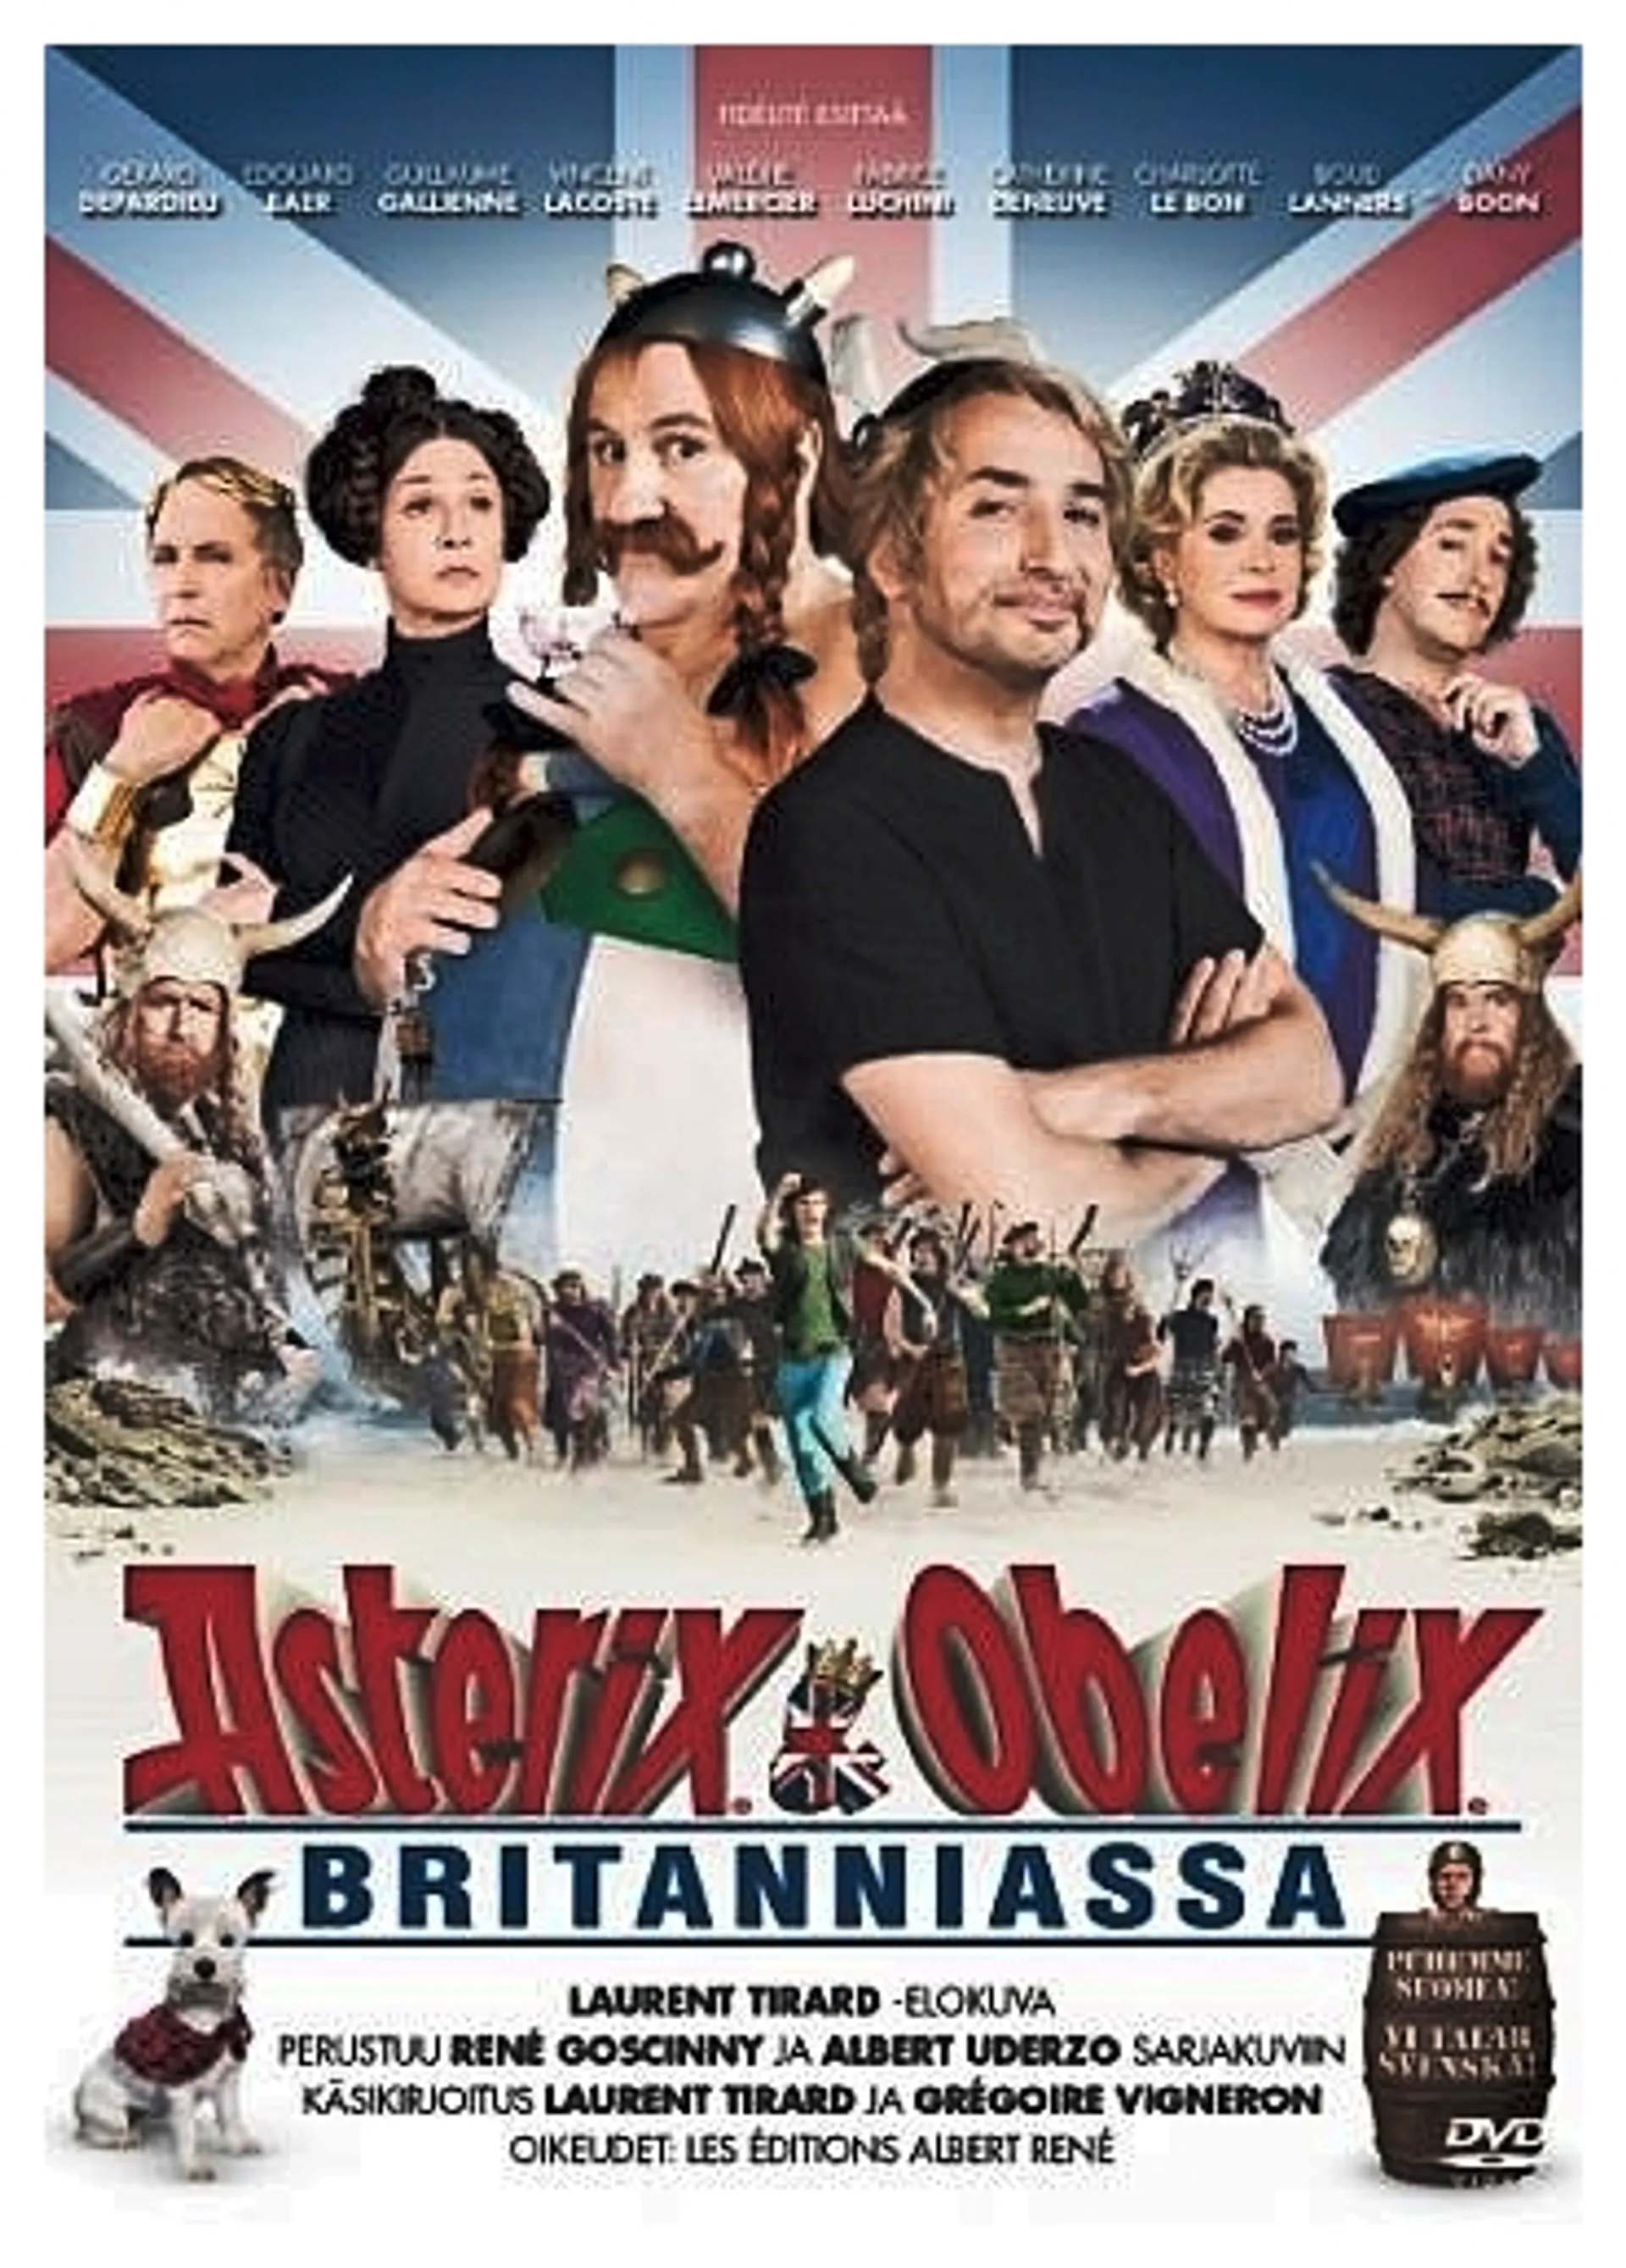 Asterix & Obelix Britanniassa DVD